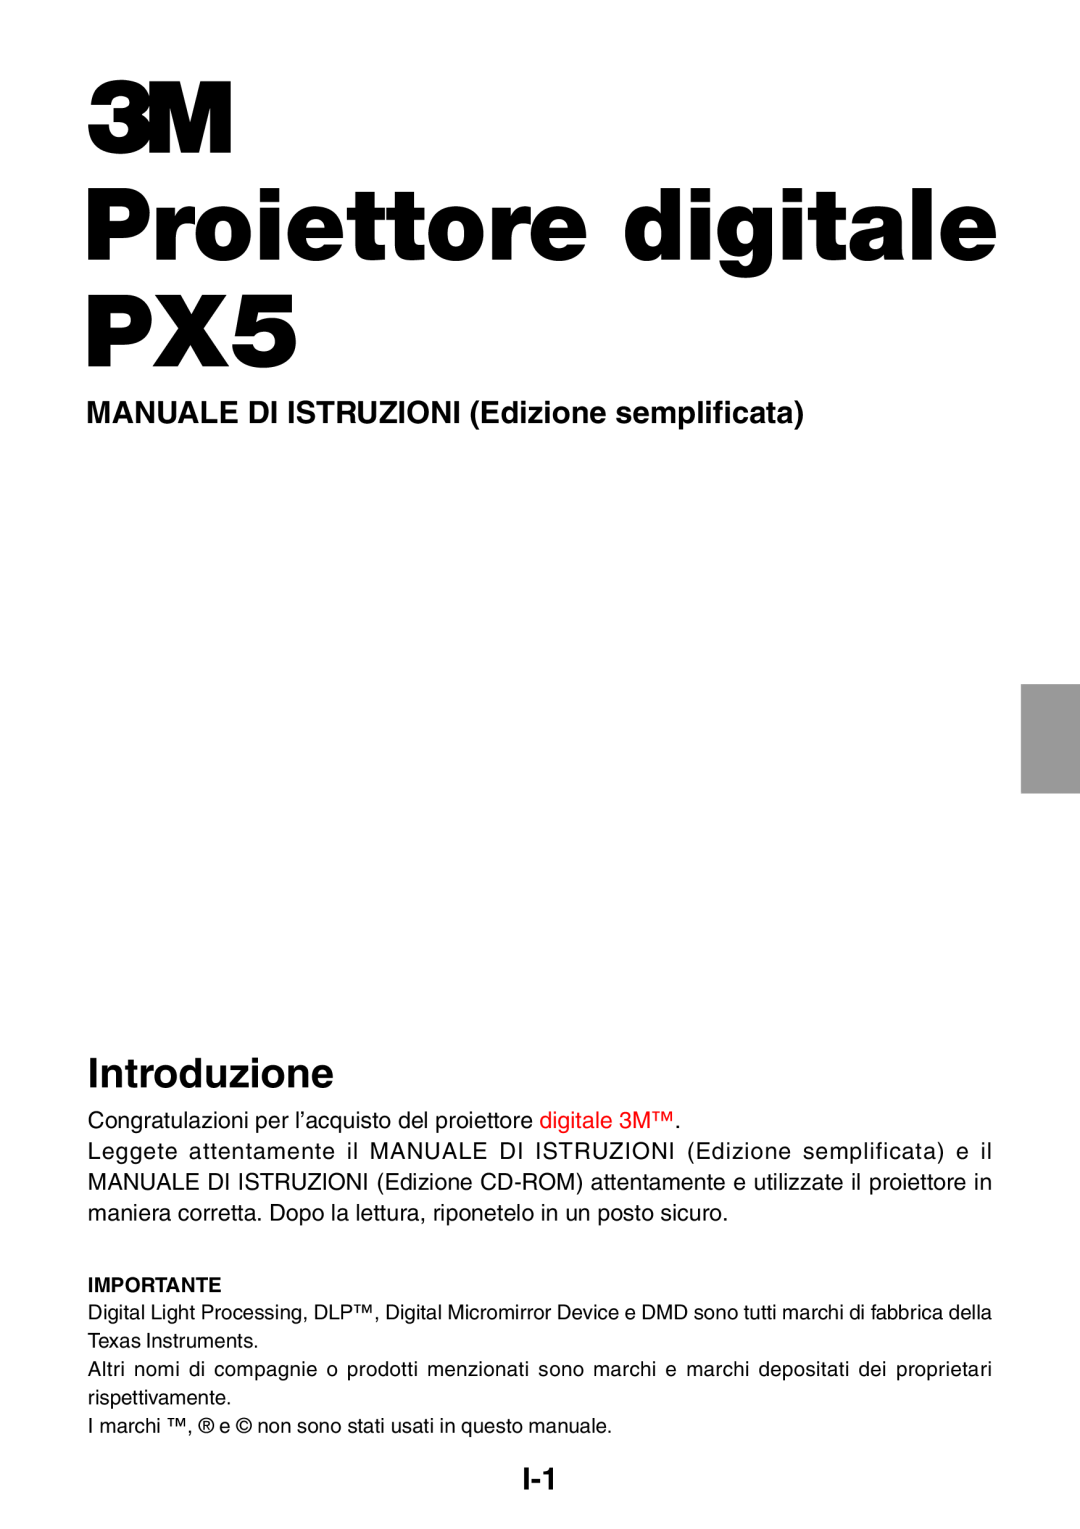 3M user manual Proiettore digitale PX5, Introduzione, MANUALE DI ISTRUZIONI Edizione semplificata 